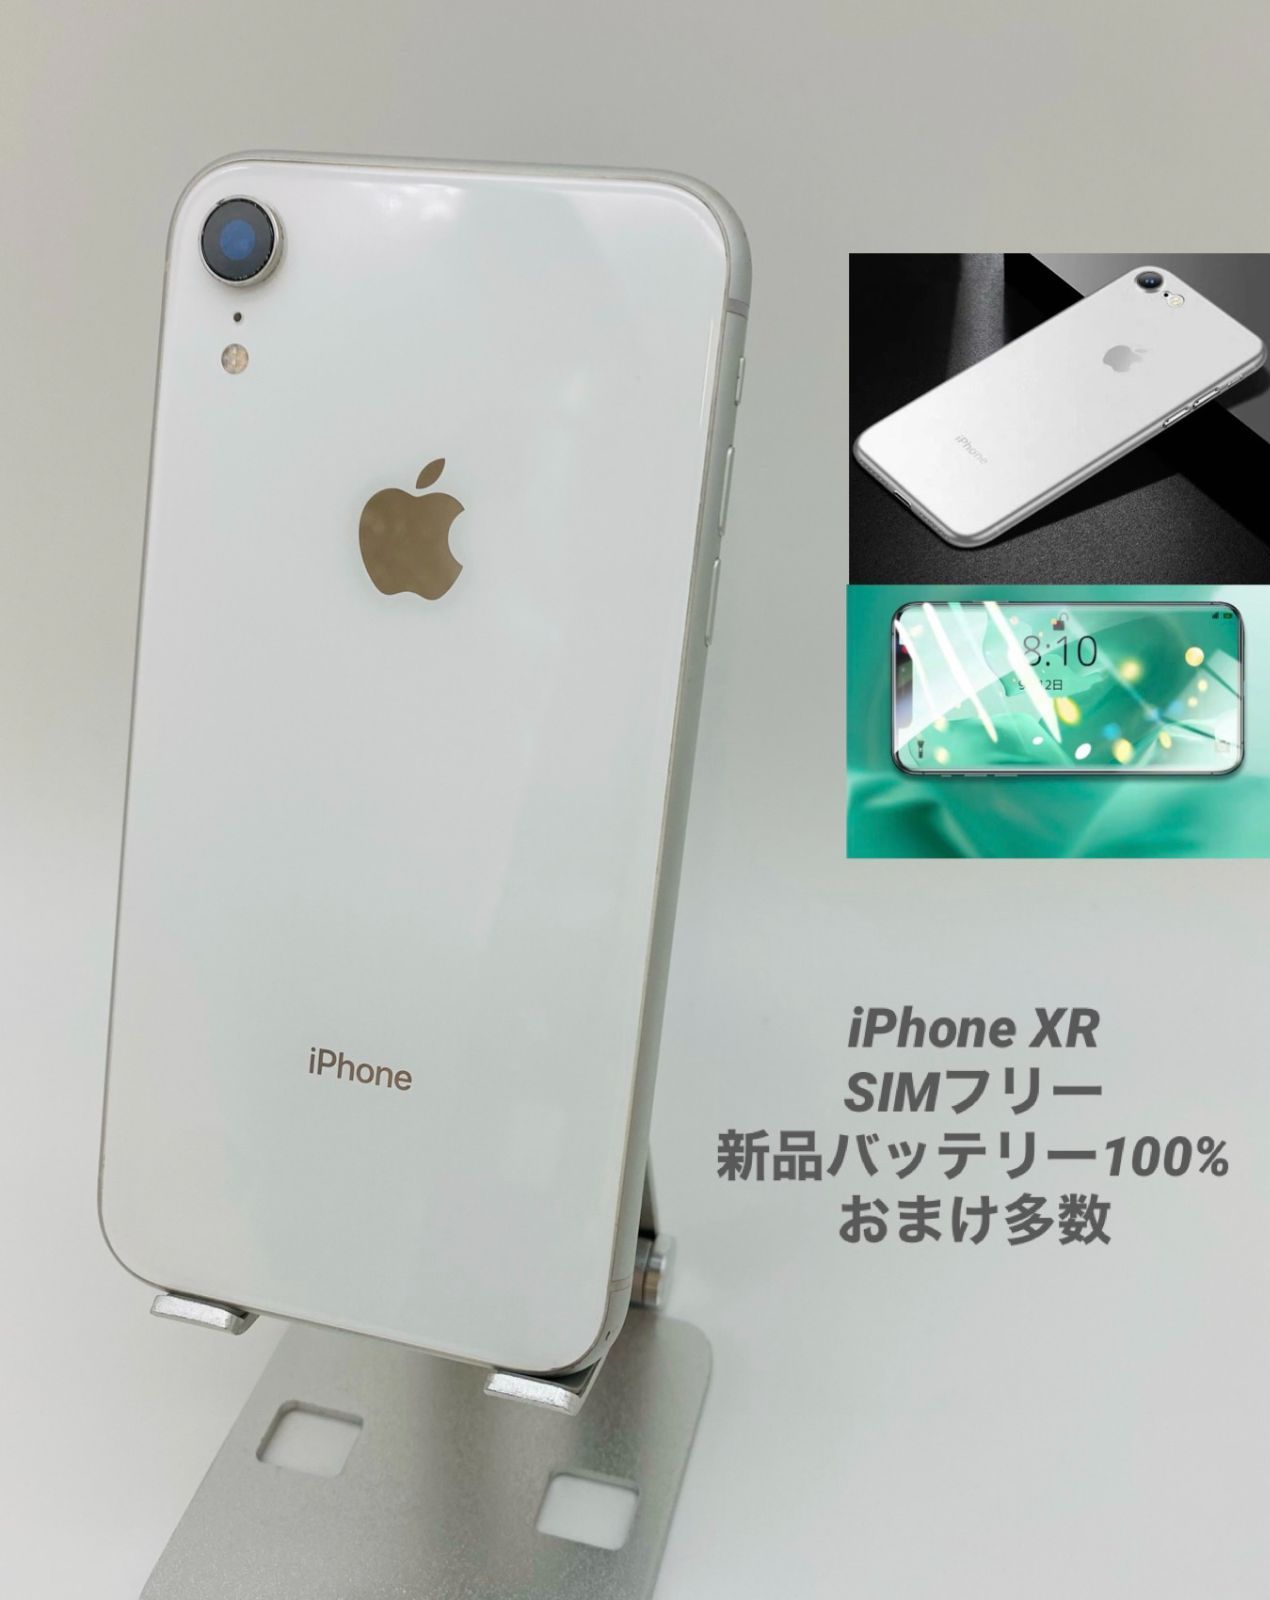 iphoneXR 64gb white simフリー